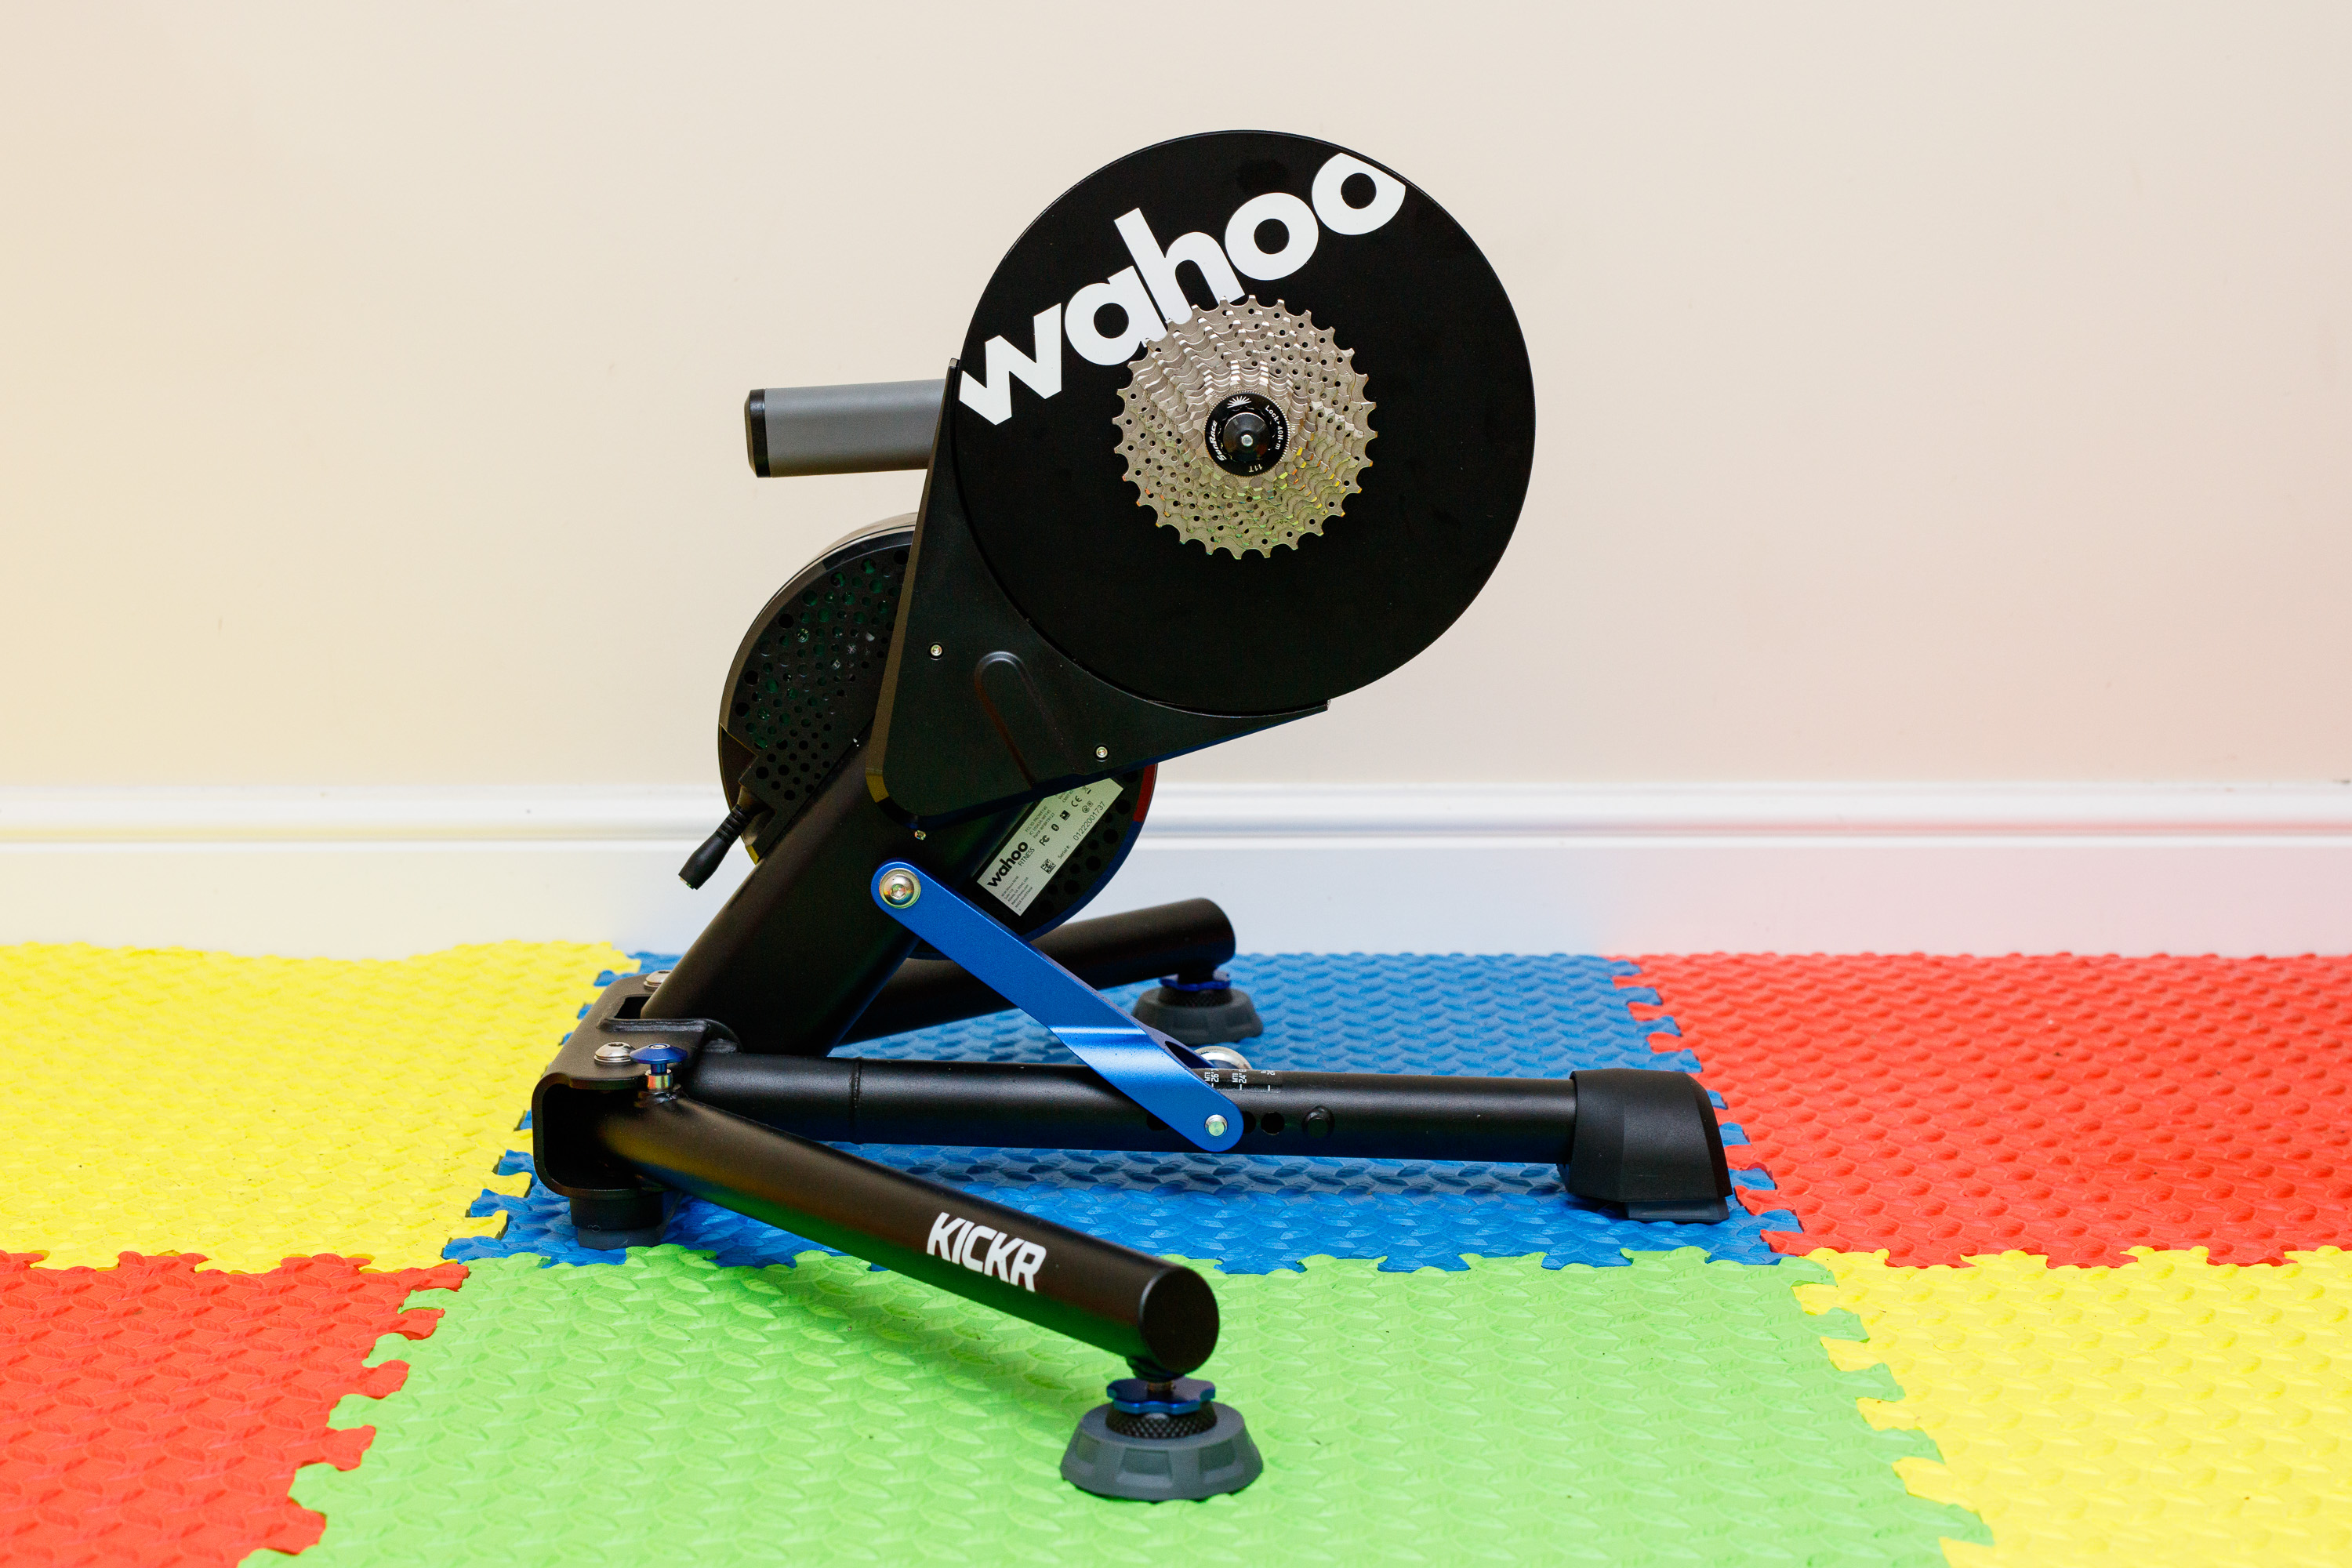 Wahoo Kickr Core Direct-Drive Smart Trainer - Best Smart Trainers